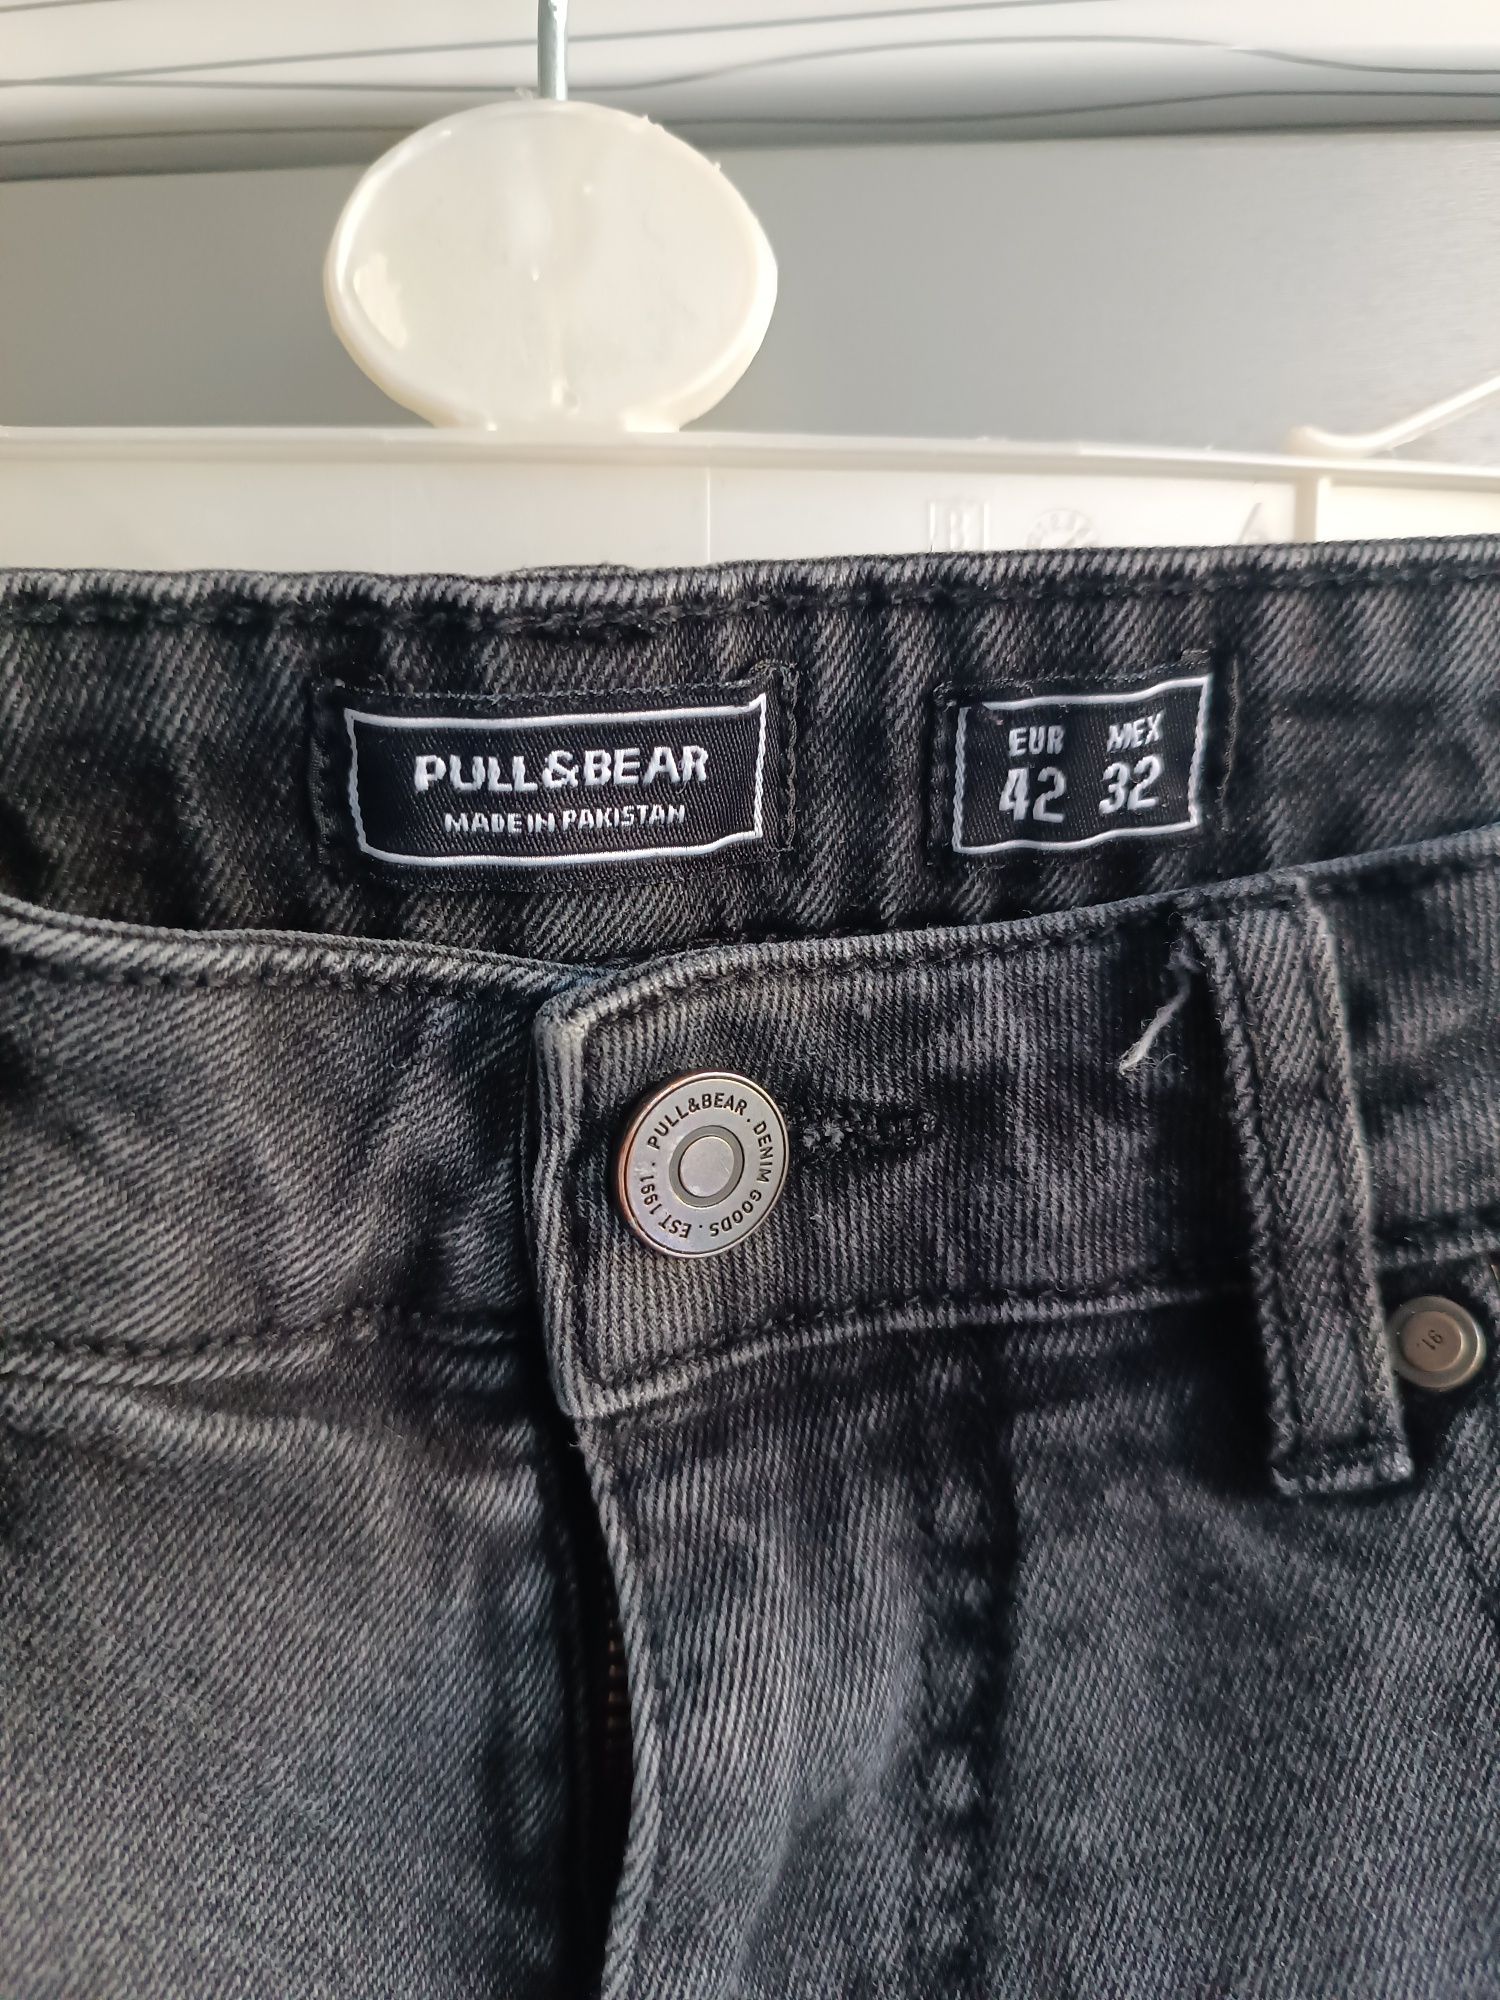 Spodenki męskie jeans PULL Bear- 42/32 czarne.Bdb